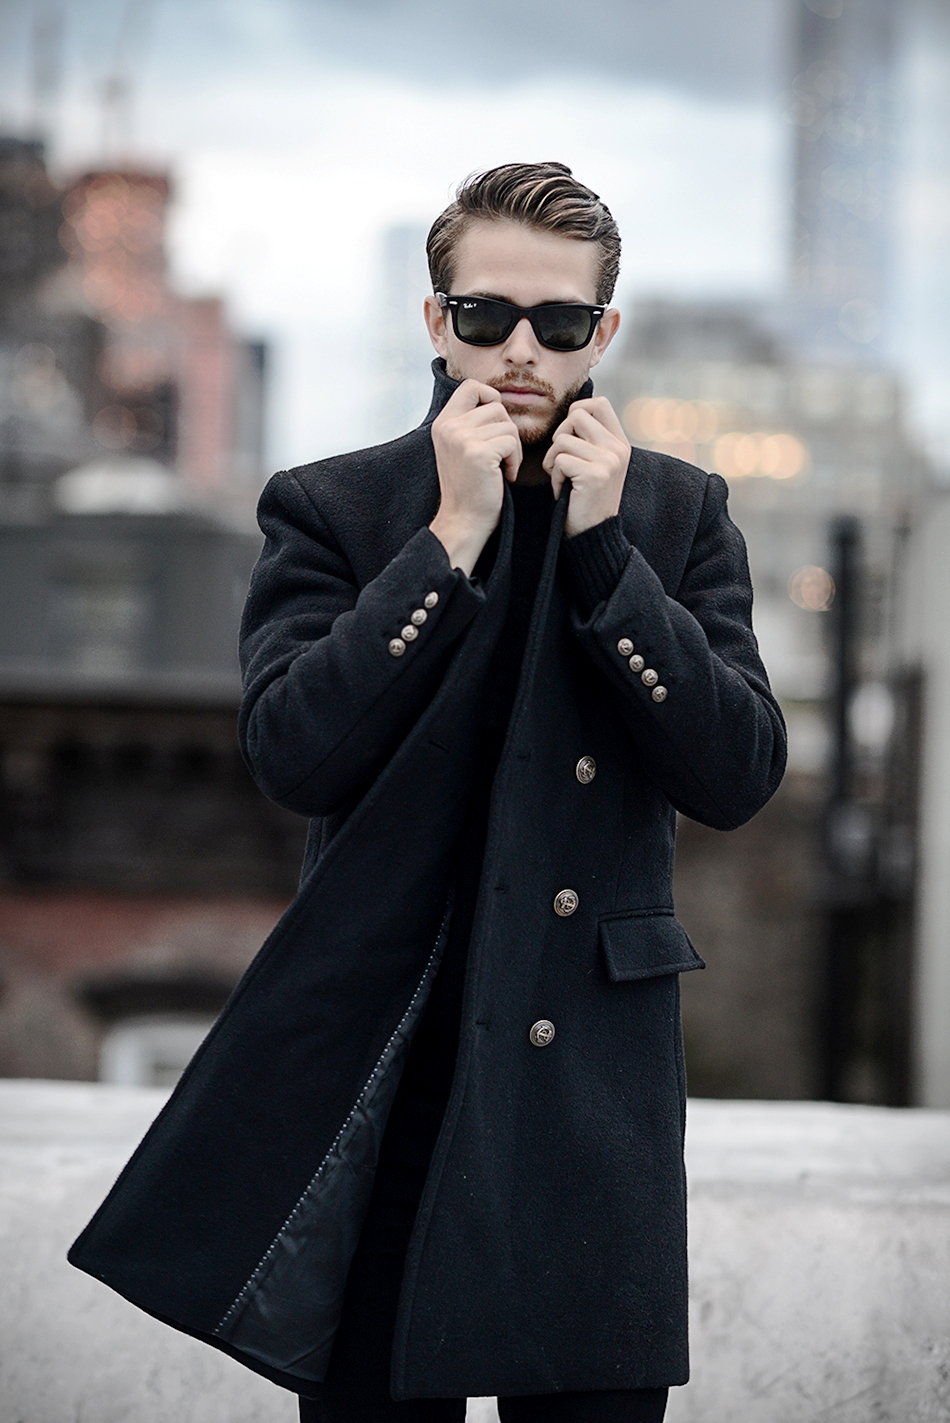 25 Winter Men's Fashion Ideas To Suit Yourself In Season